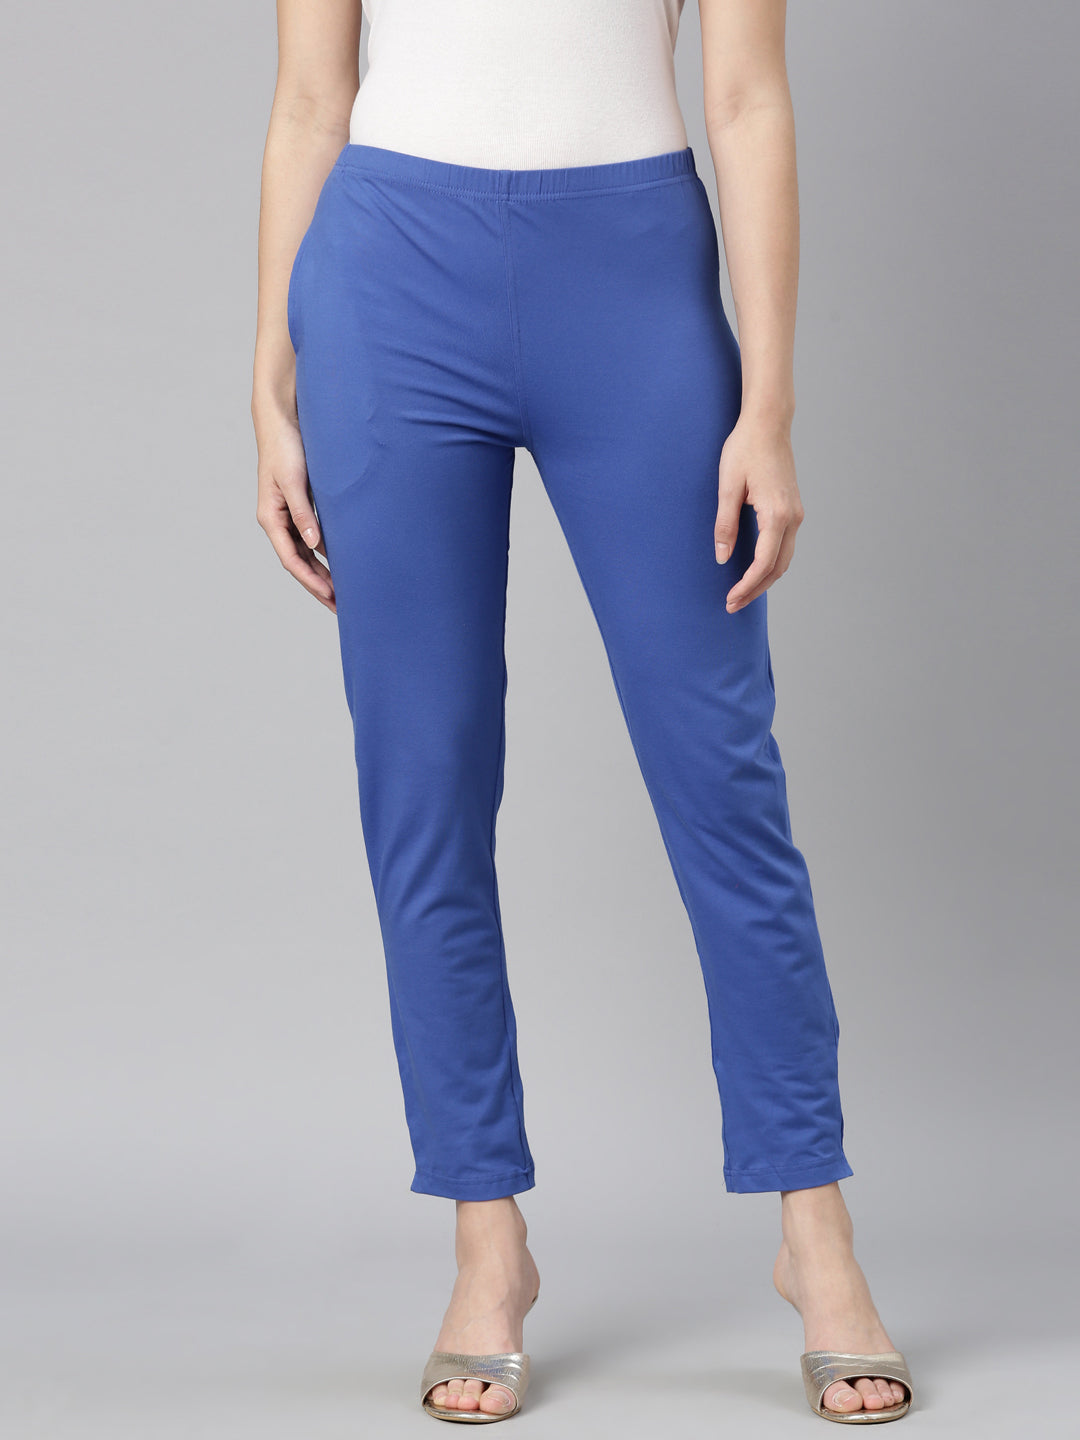 Buy Comfort Lady Kurti Pants Plus Size Women (Beige) at Amazon.in